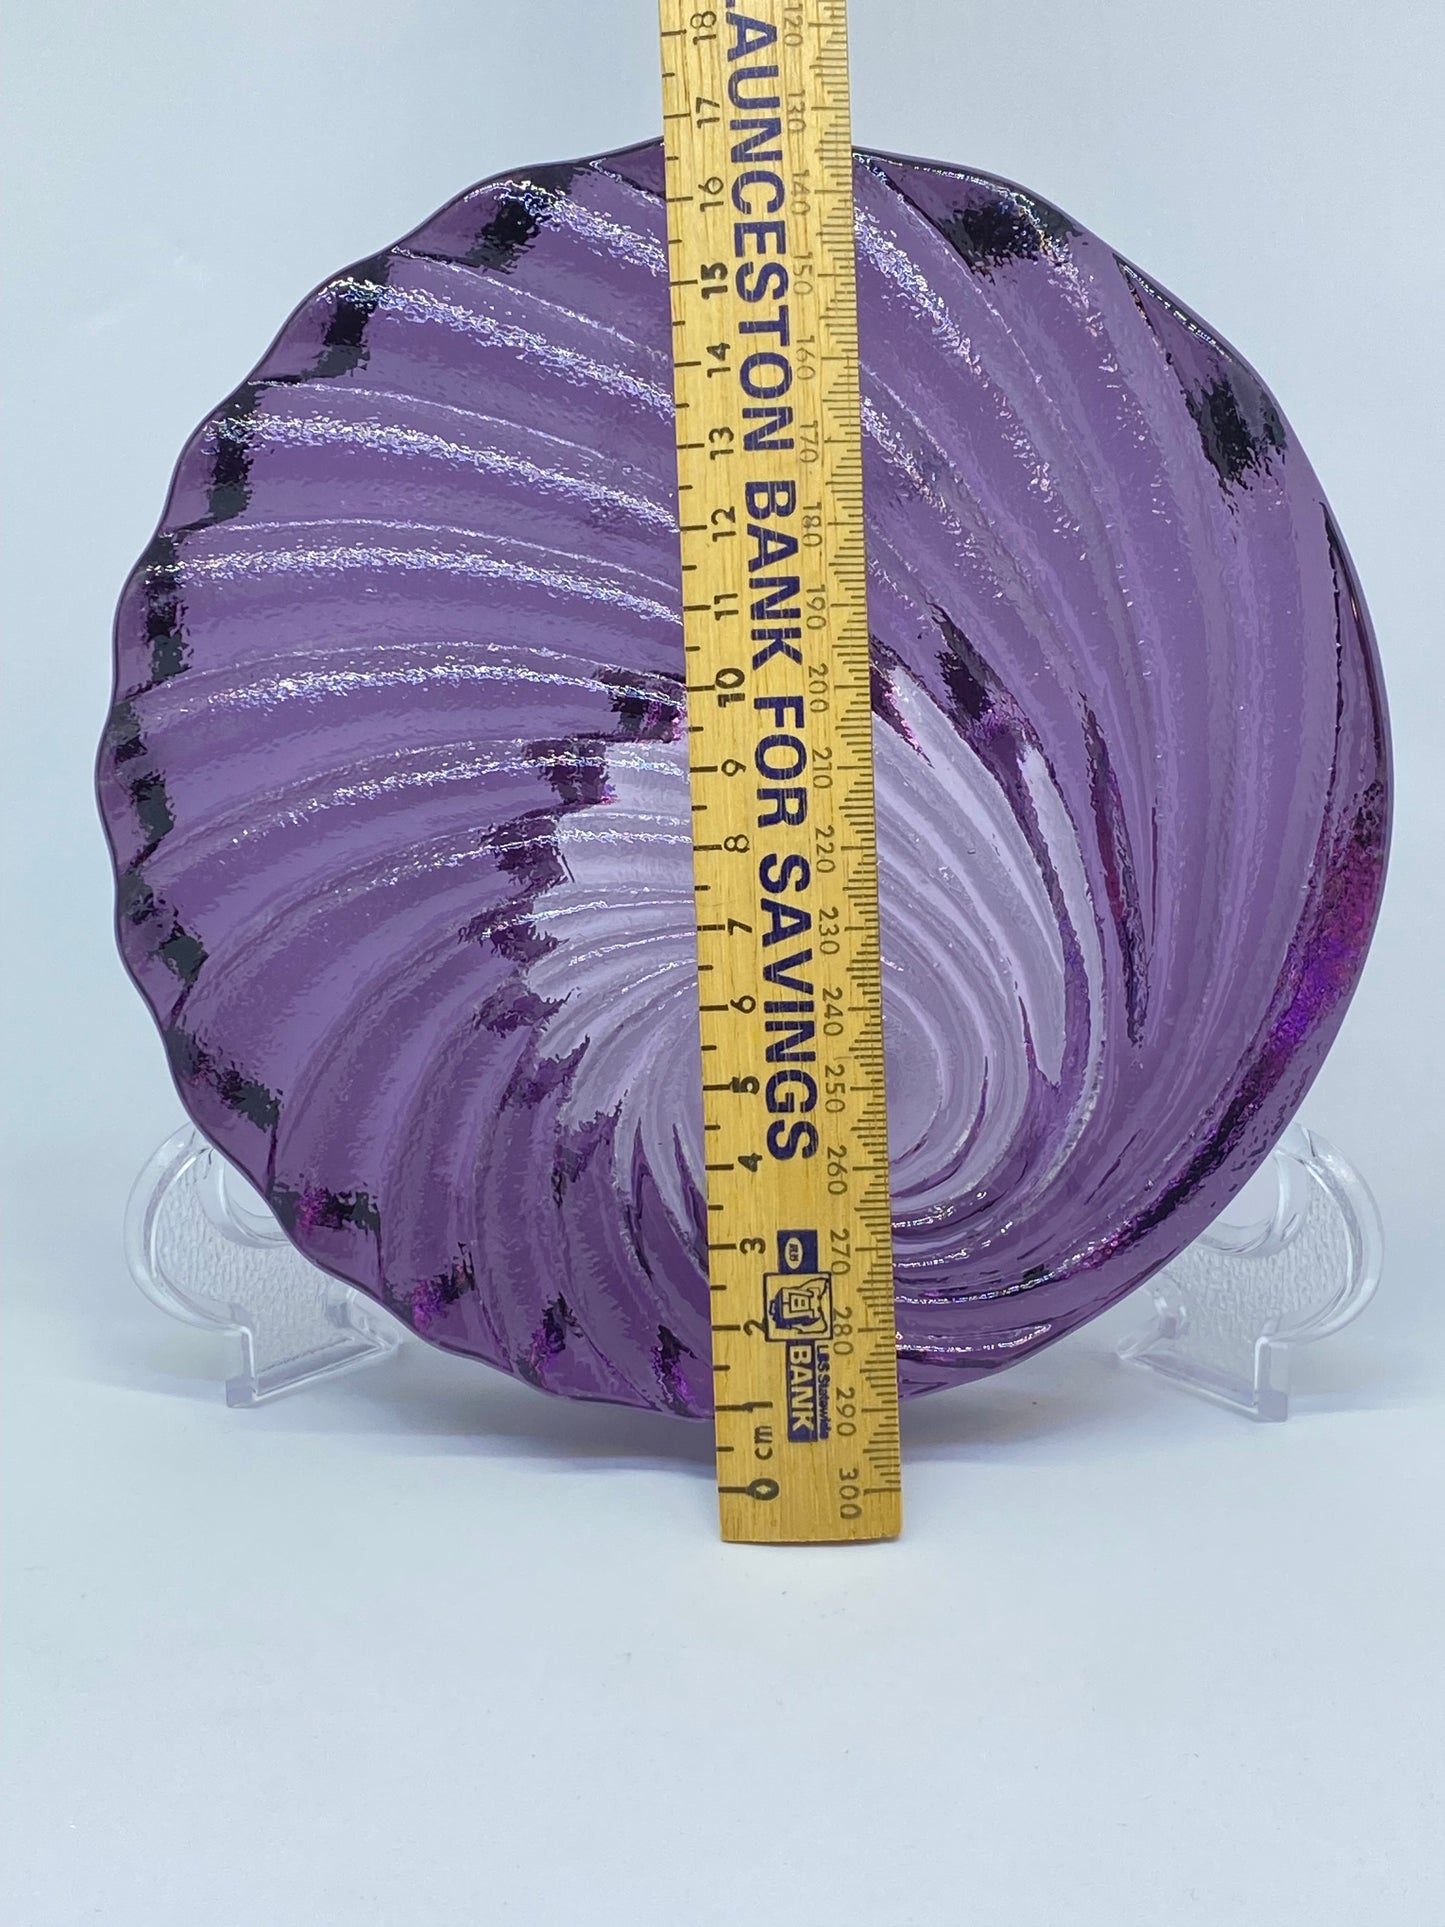 MCM Purple glass ashtray / bowl - heavy